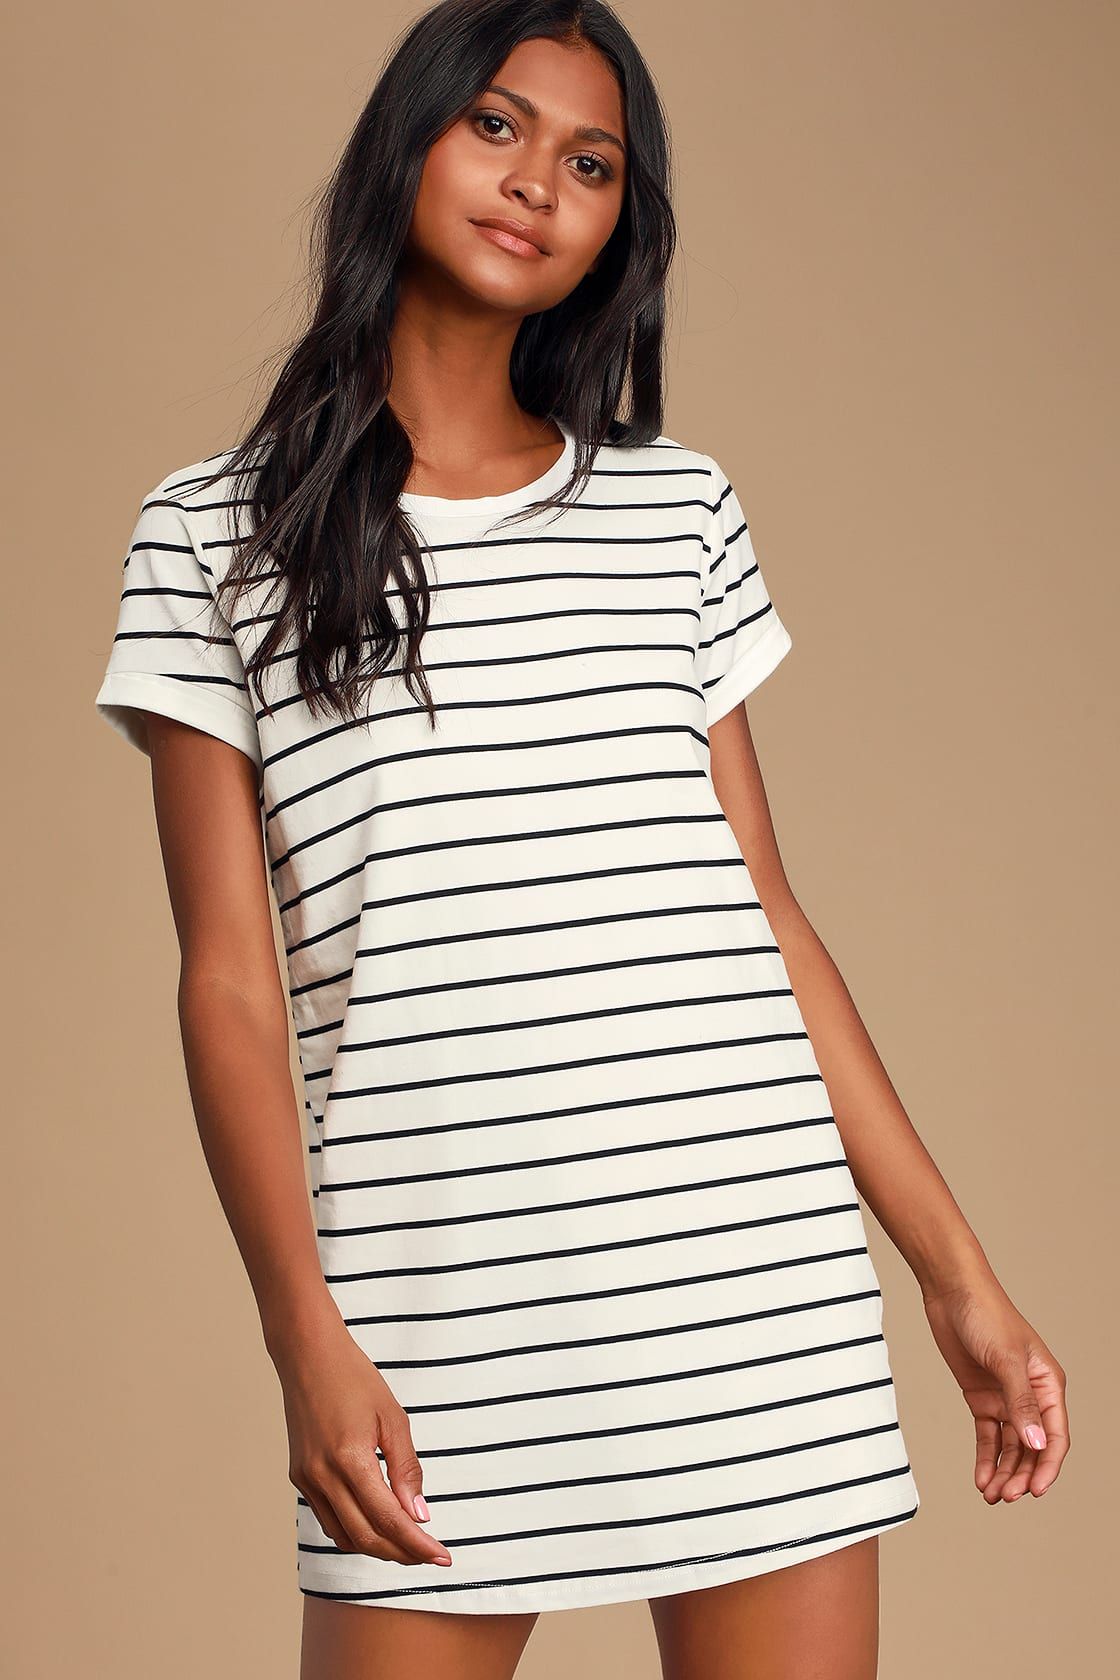 Cafe Society Black and Cream Striped Shirt Dress | Lulus